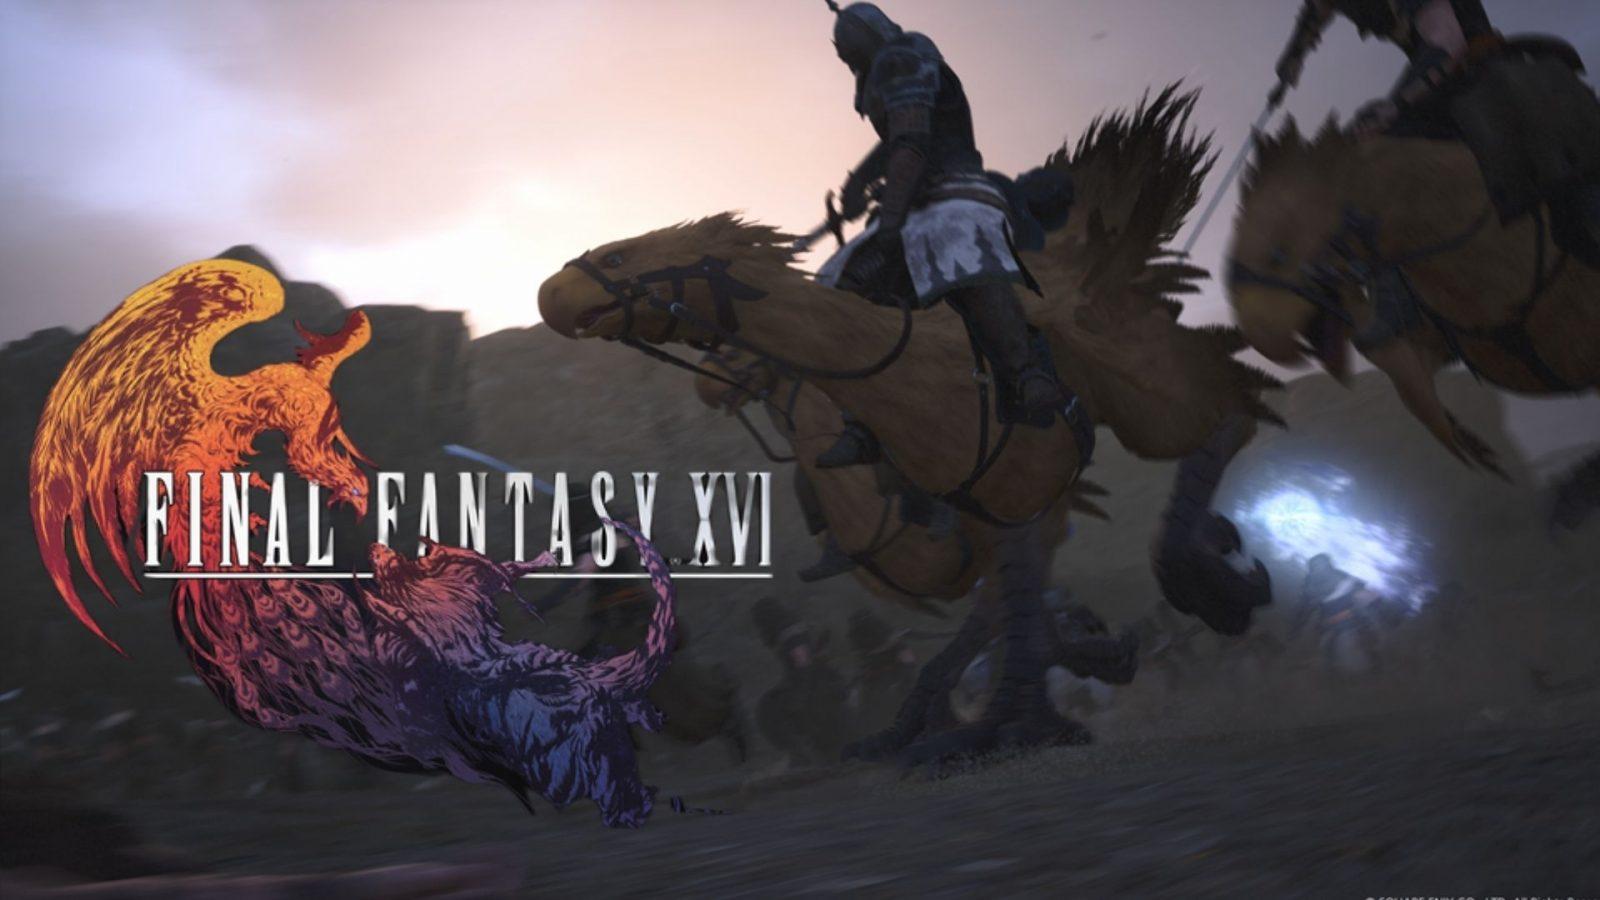 Final Fantasy XIV character riding a chocobo